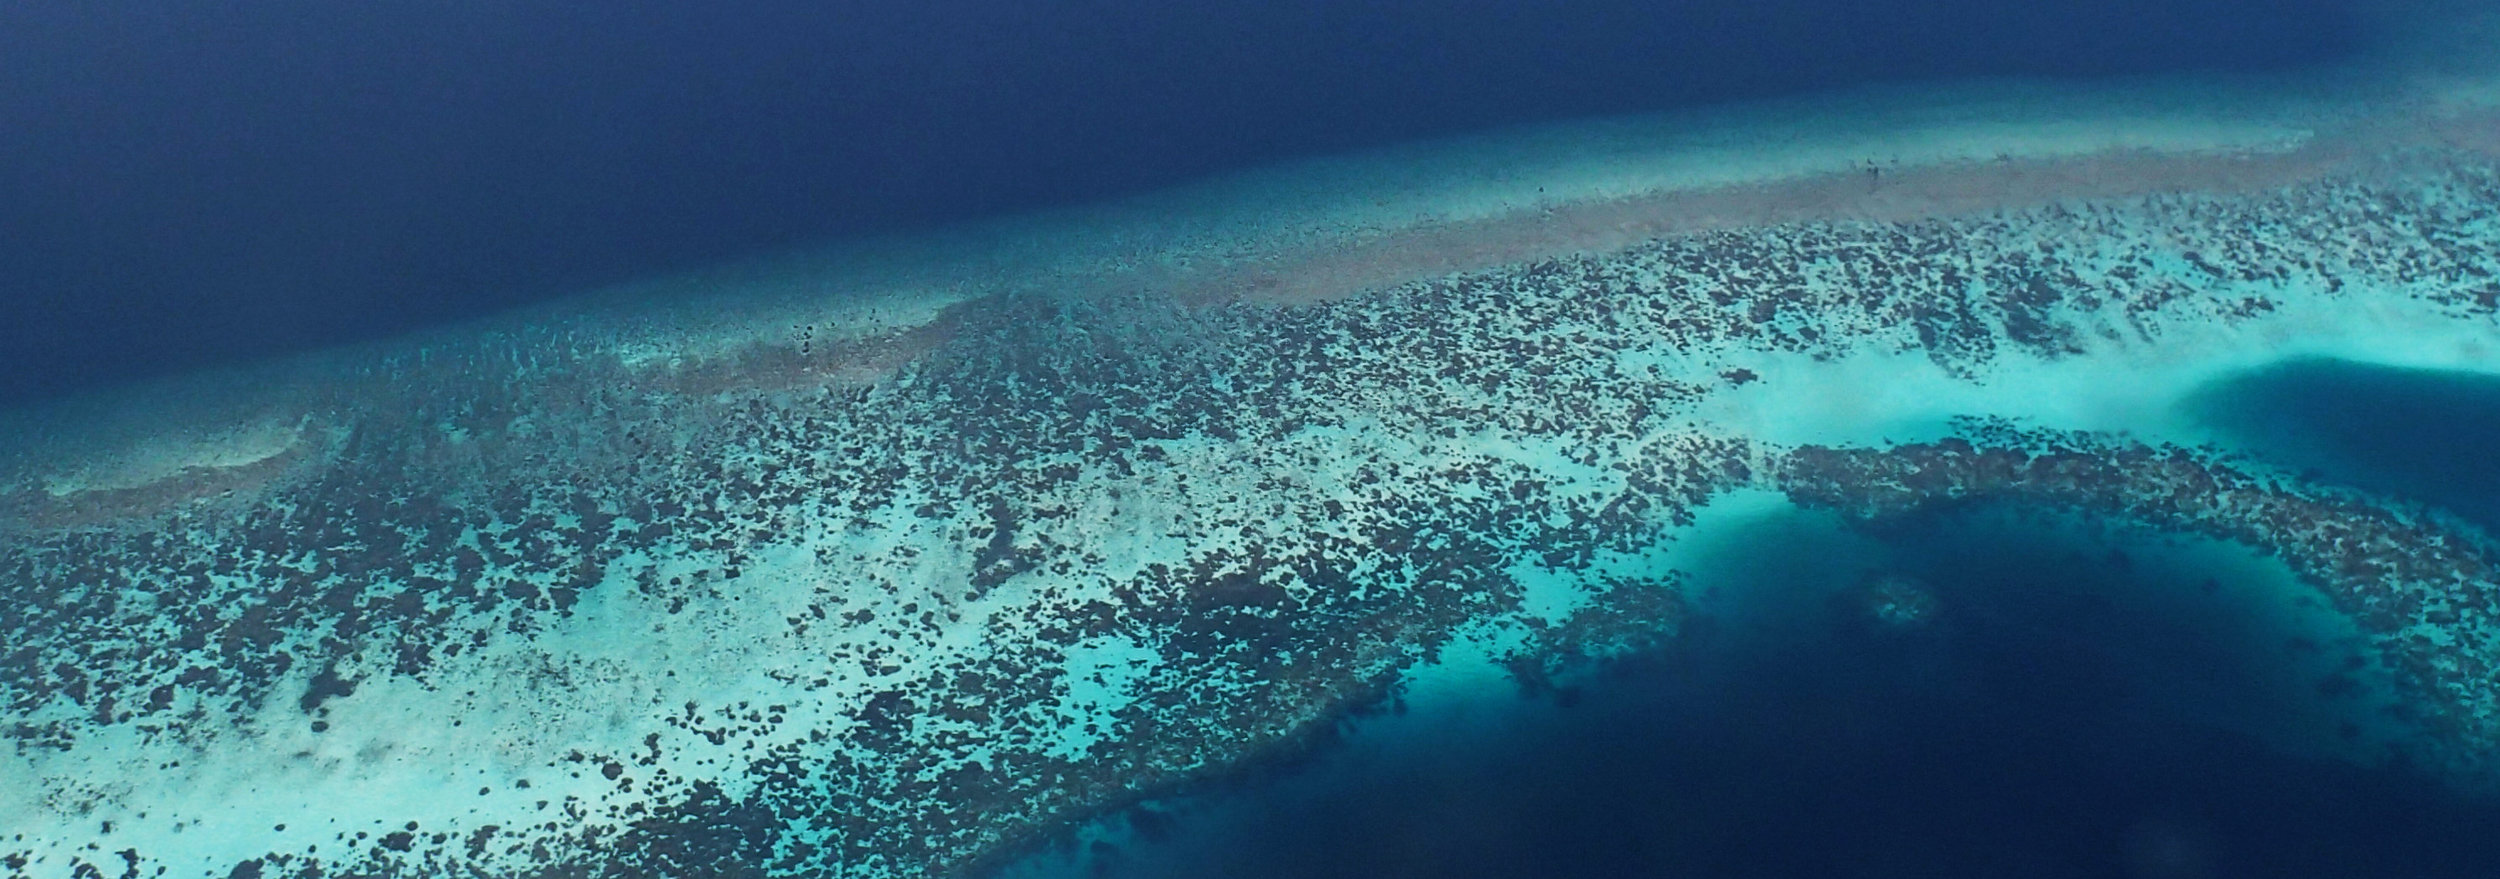 Maldivian reefs.jpg